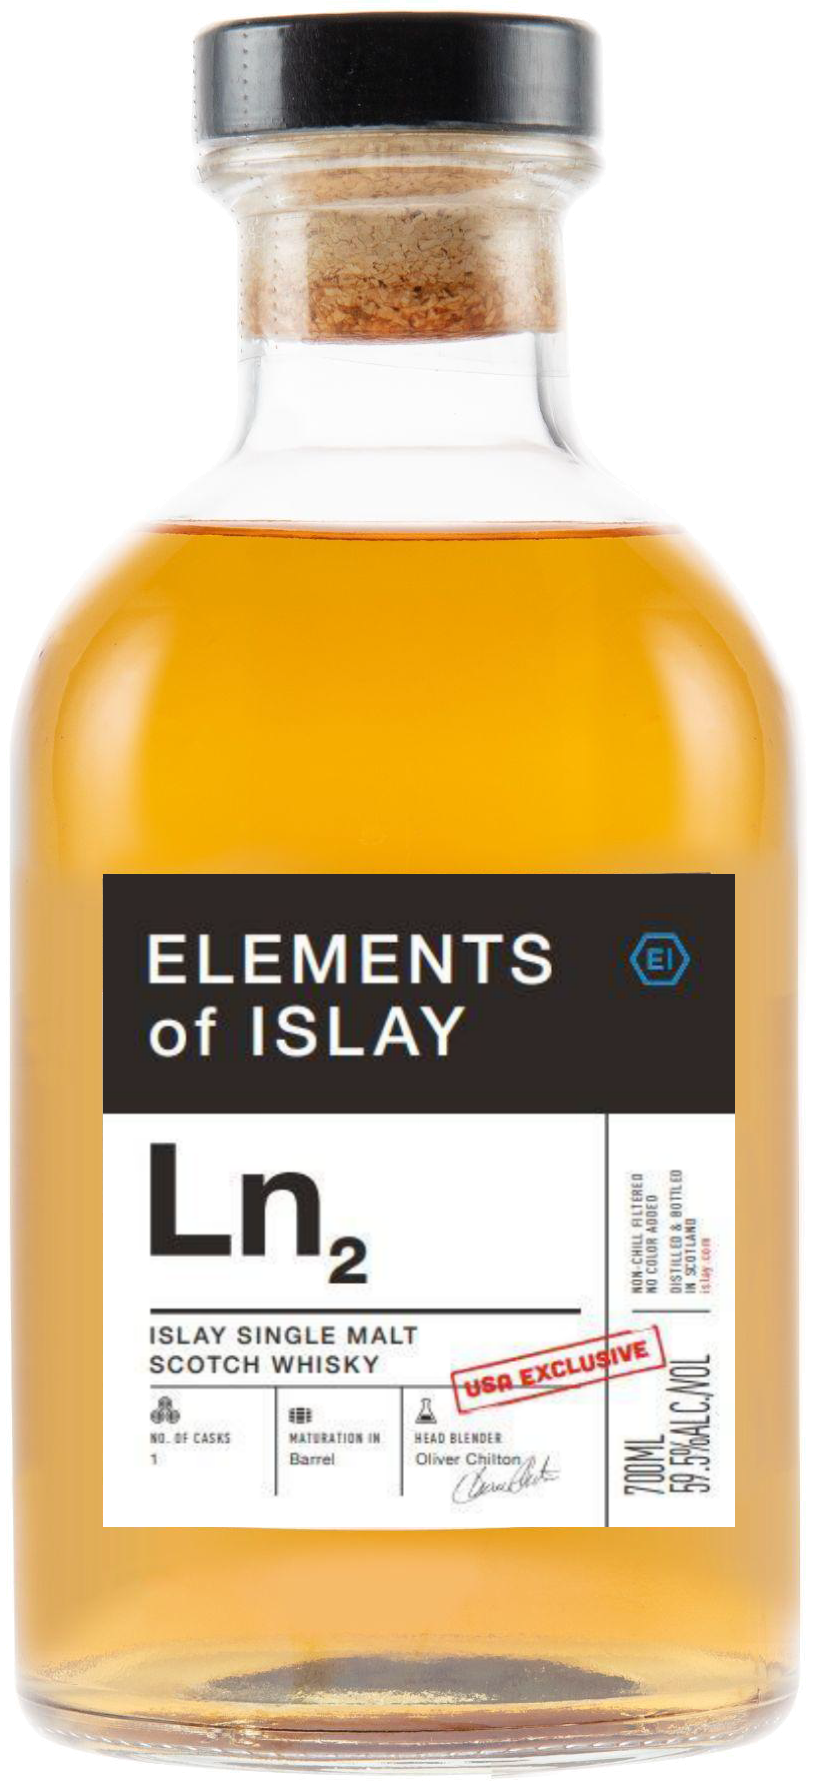 Elements of Islay LN2 Islay Single Malt Scotch Whisky 59.5% abv